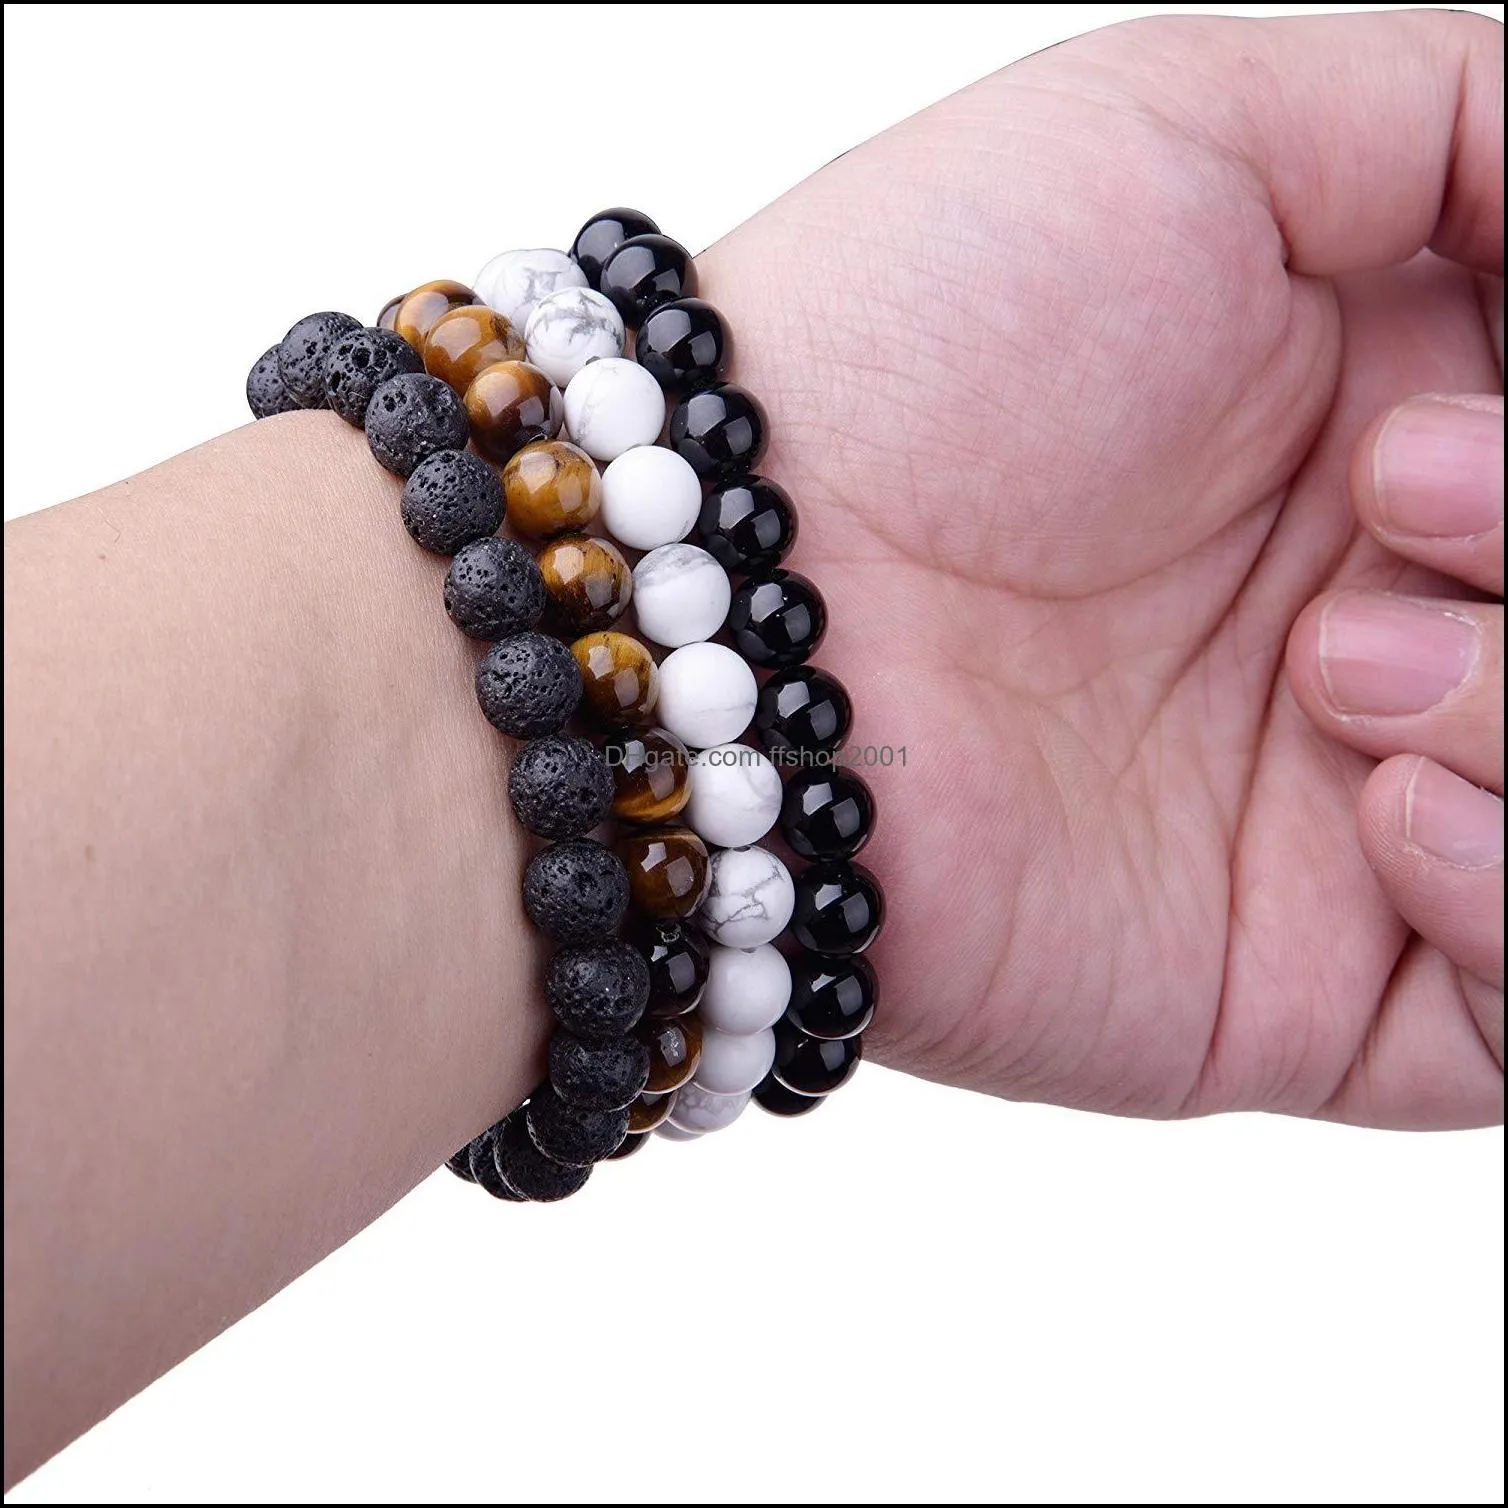 handmade 8mm natural lava stone bead bracelet for men women adjustable oil perfume diffuser healing bracelet stretch yoga jewelry